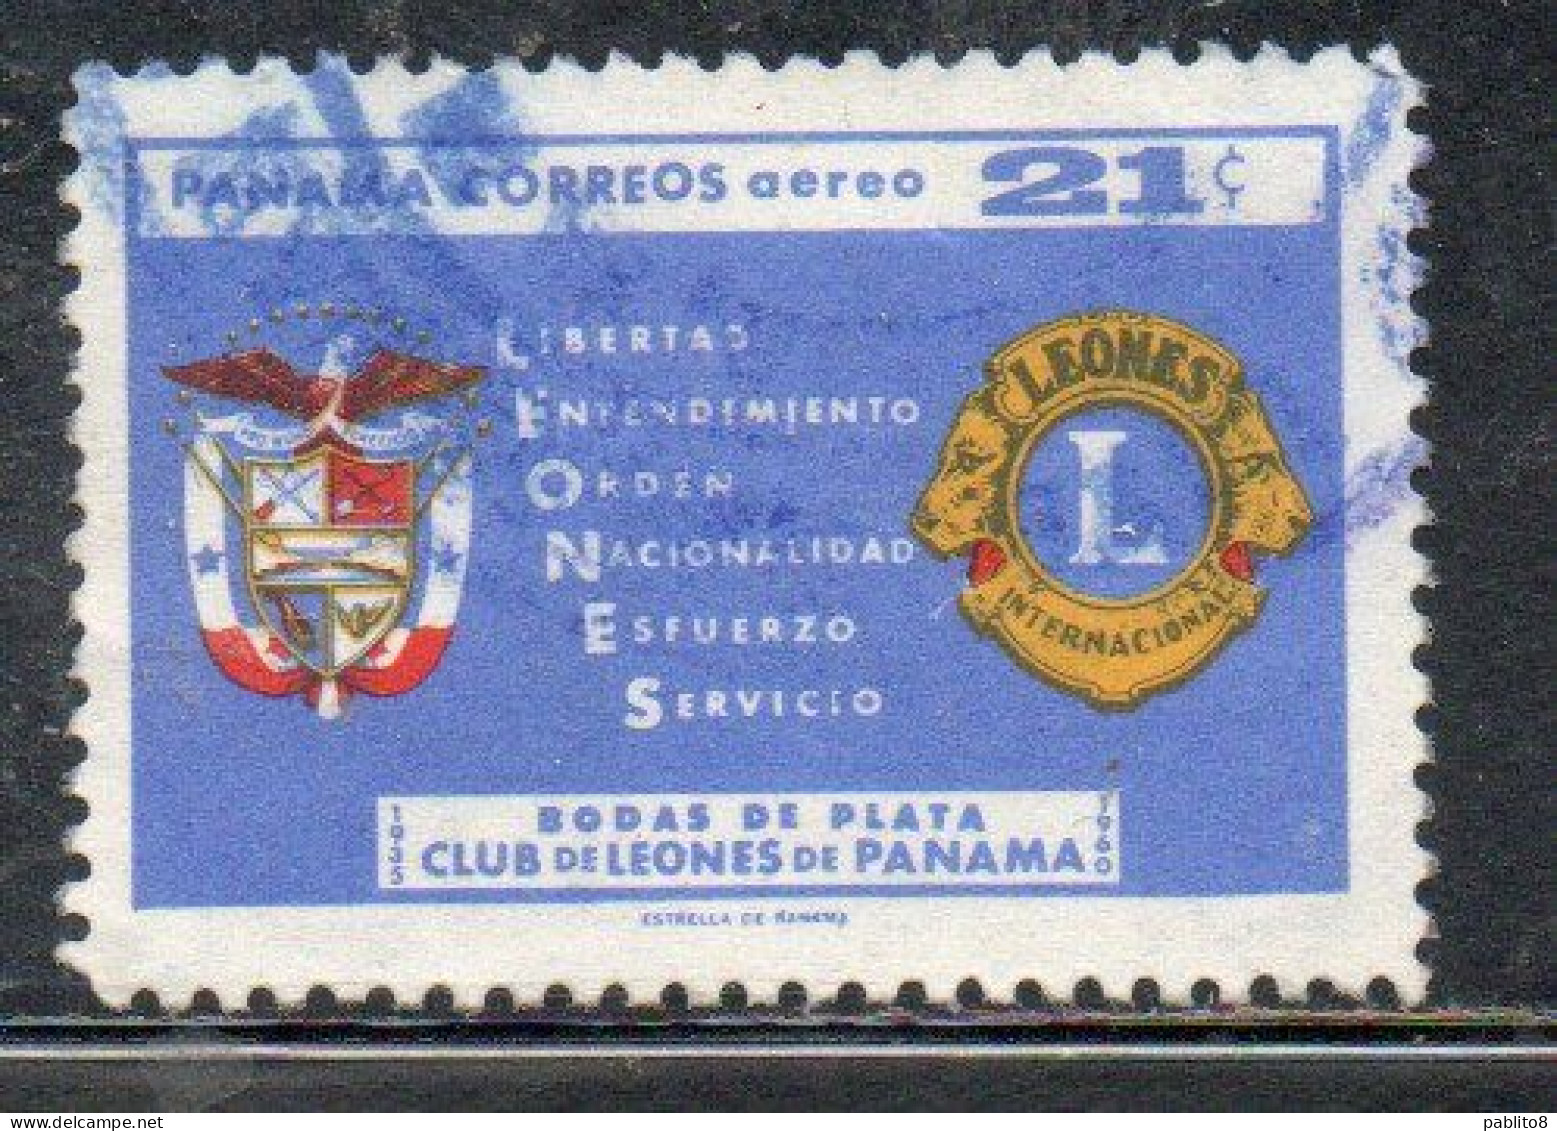 REPUBLICA DE PANAMA REPUBLIC 1961  AEREO AIR POST MAIL AIRMAIL LIONS INTERNATIONAL 21c USED USATO OBLITERE' - Panama